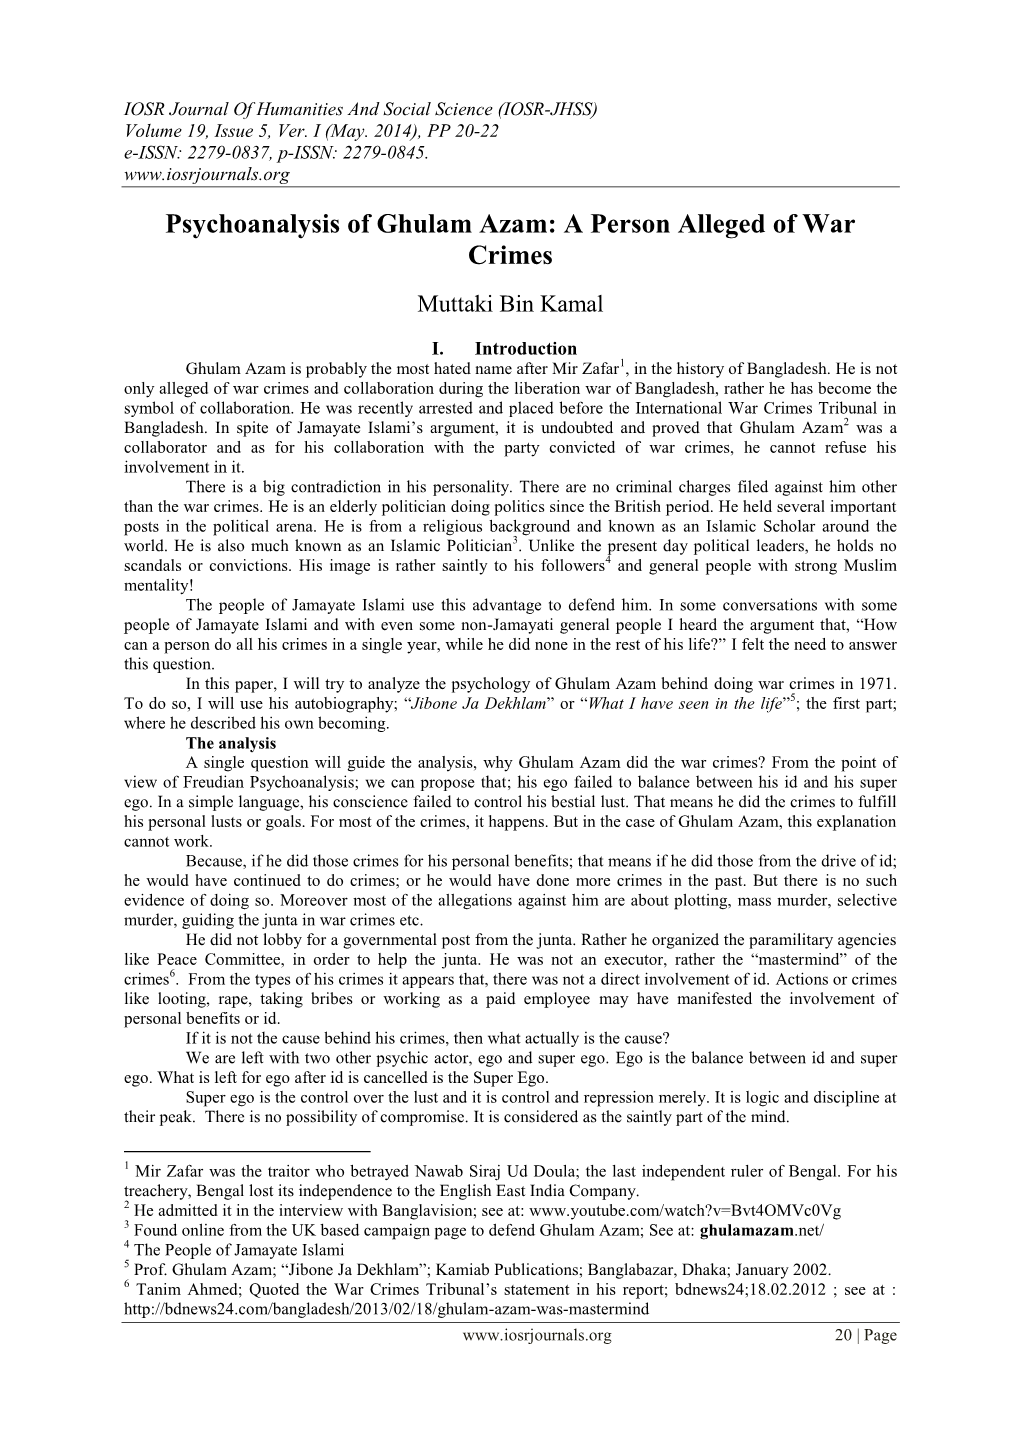 Psychoanalysis of Ghulam Azam: a Person Alleged of War Crimes